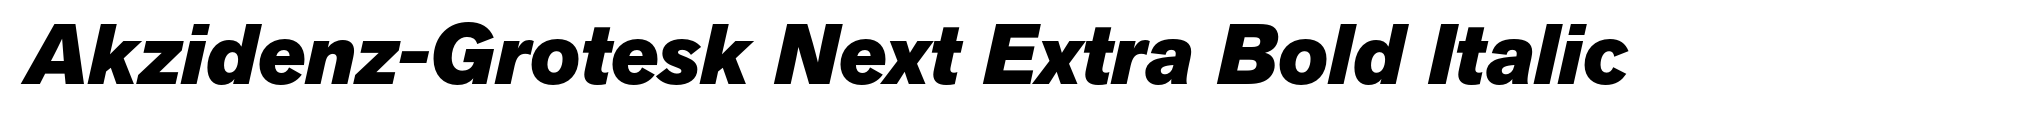 Akzidenz-Grotesk Next Extra Bold Italic image